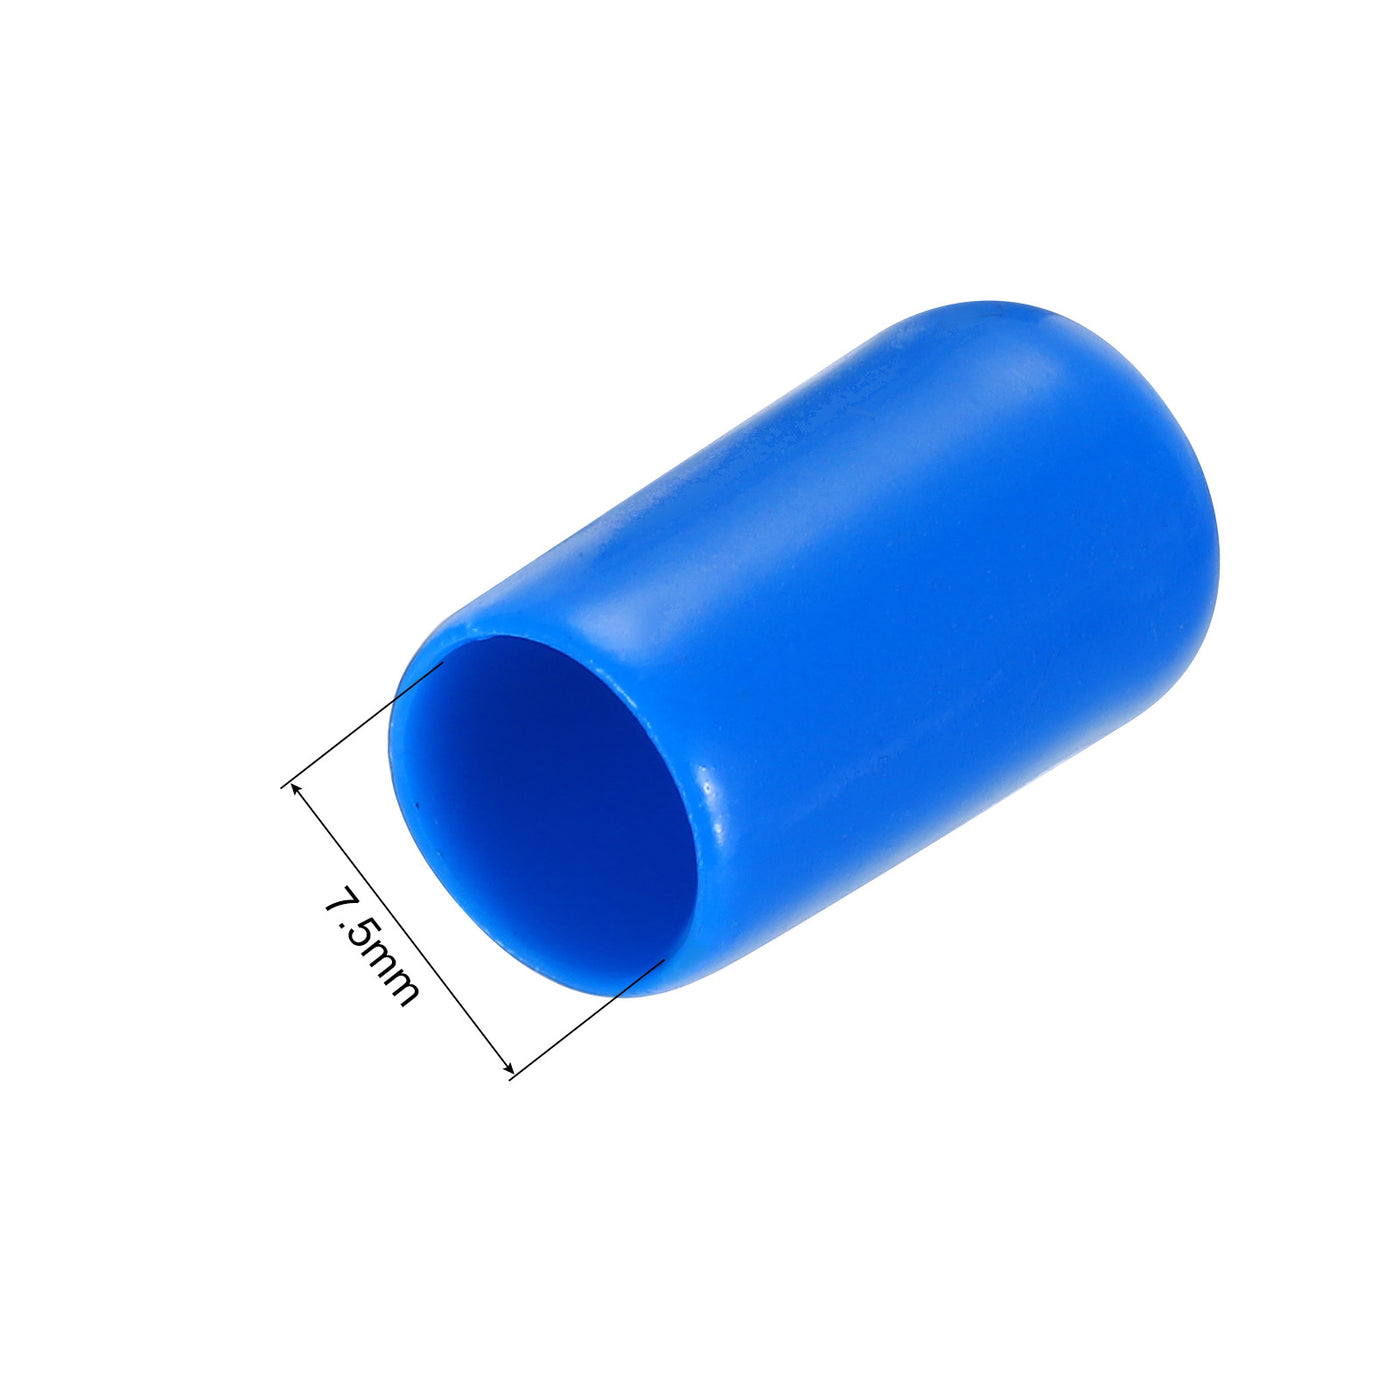 uxcell Uxcell 100pcs Rubber End Caps 7.5mm ID Vinyl PVC Round Tube Bolt Cap Cover Screw Thread Protectors Blue